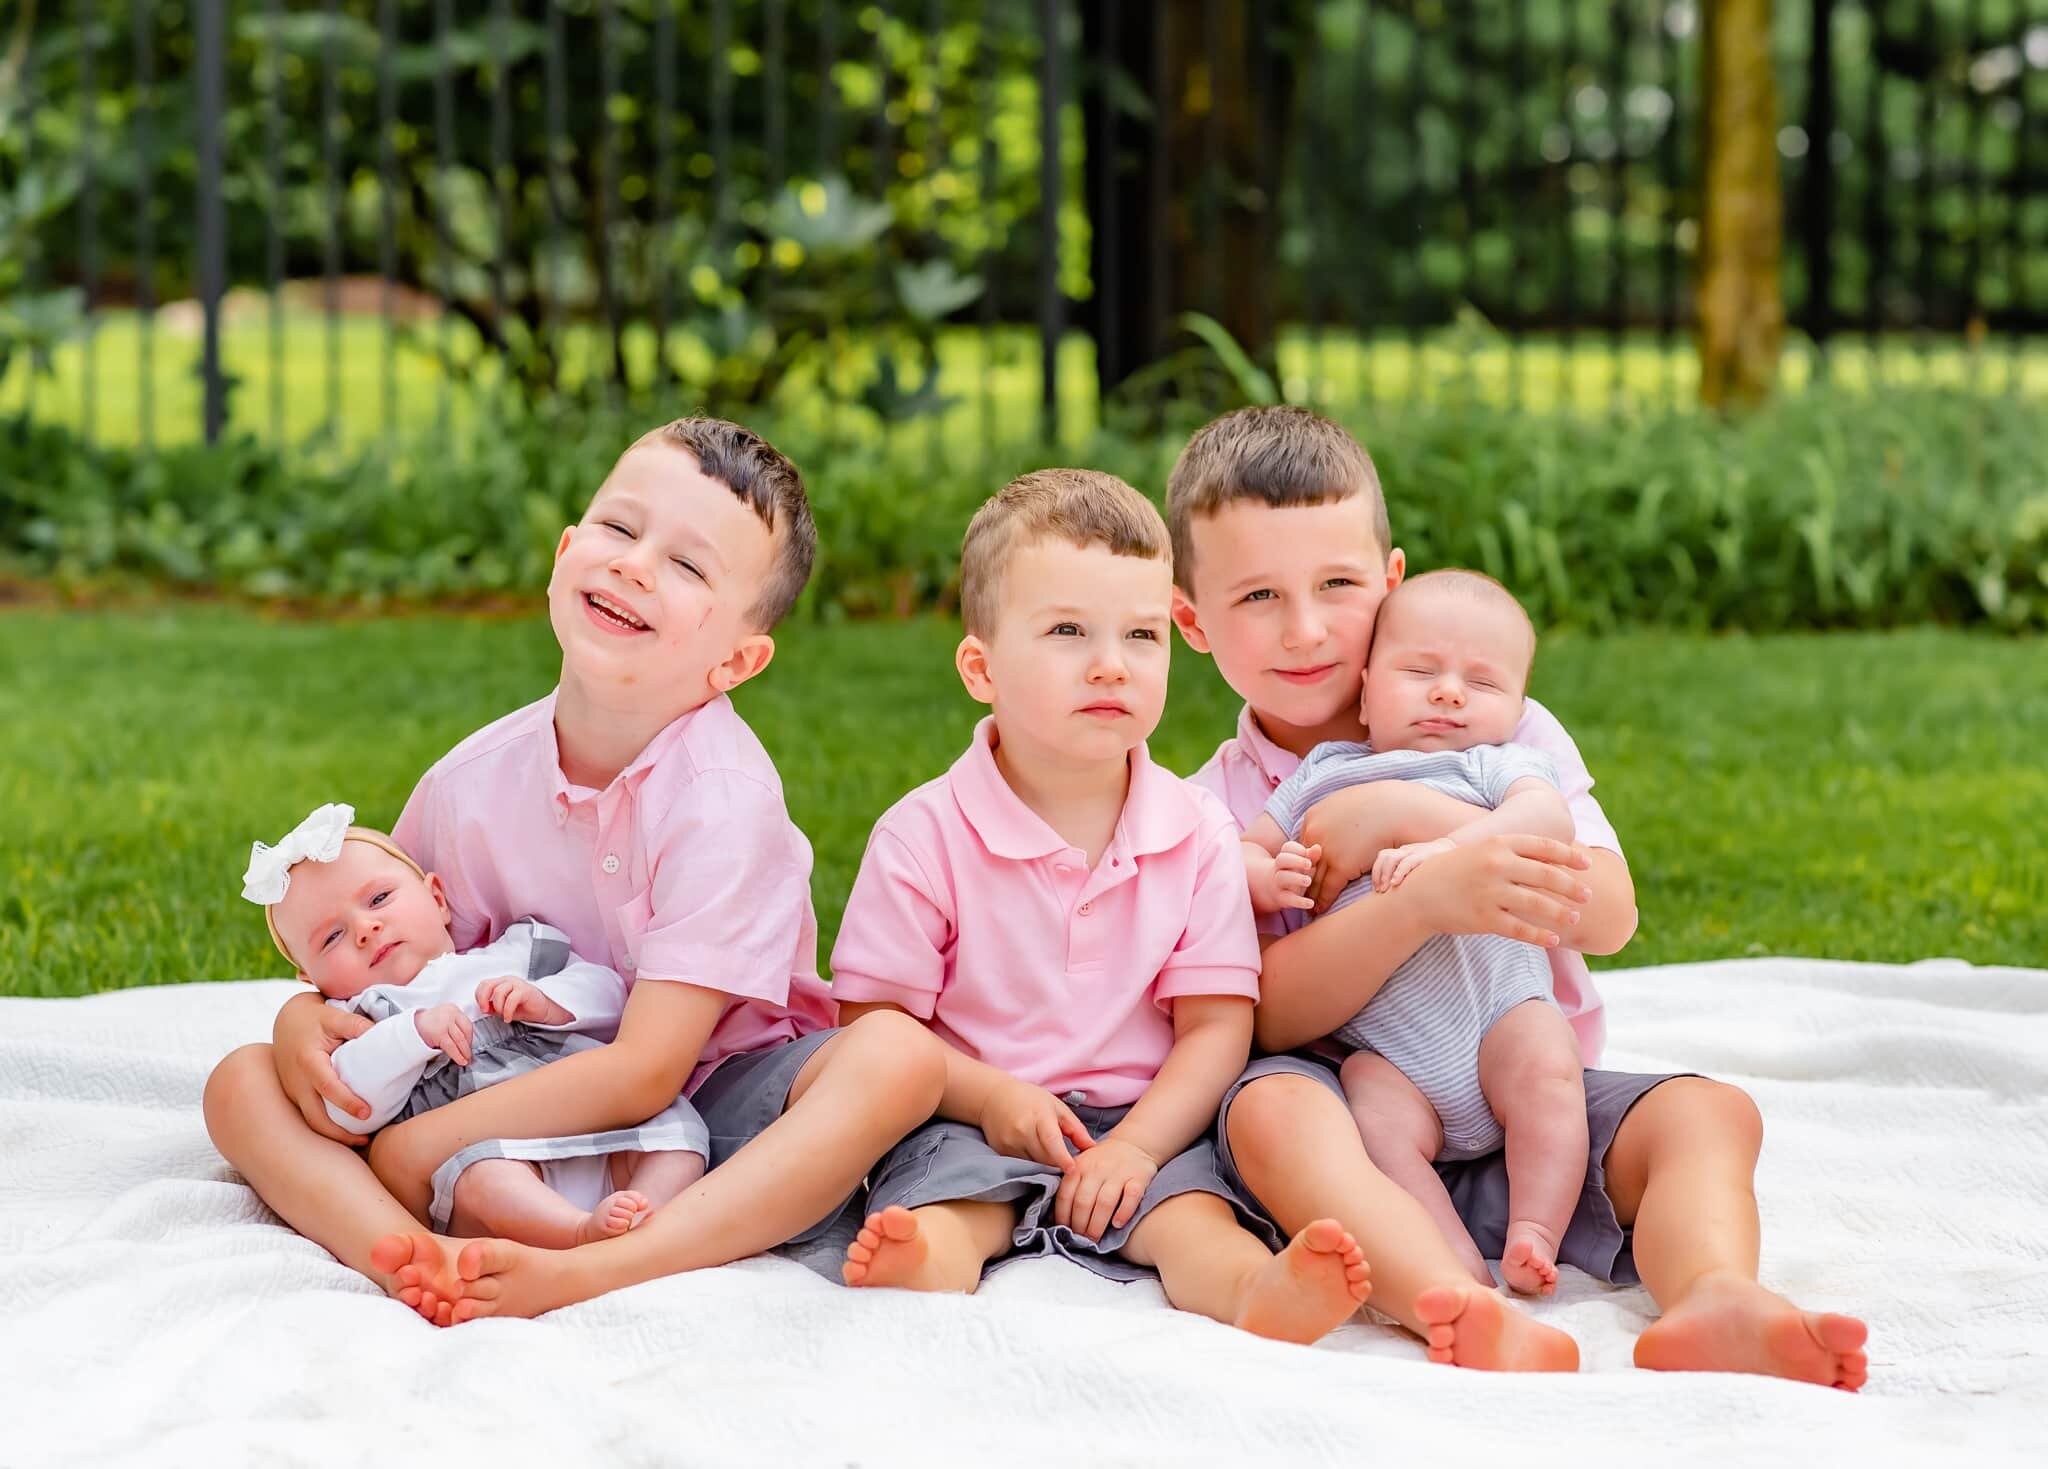 Bethesda Maryland Newborn Photoshoot - older brothers cradling baby twins